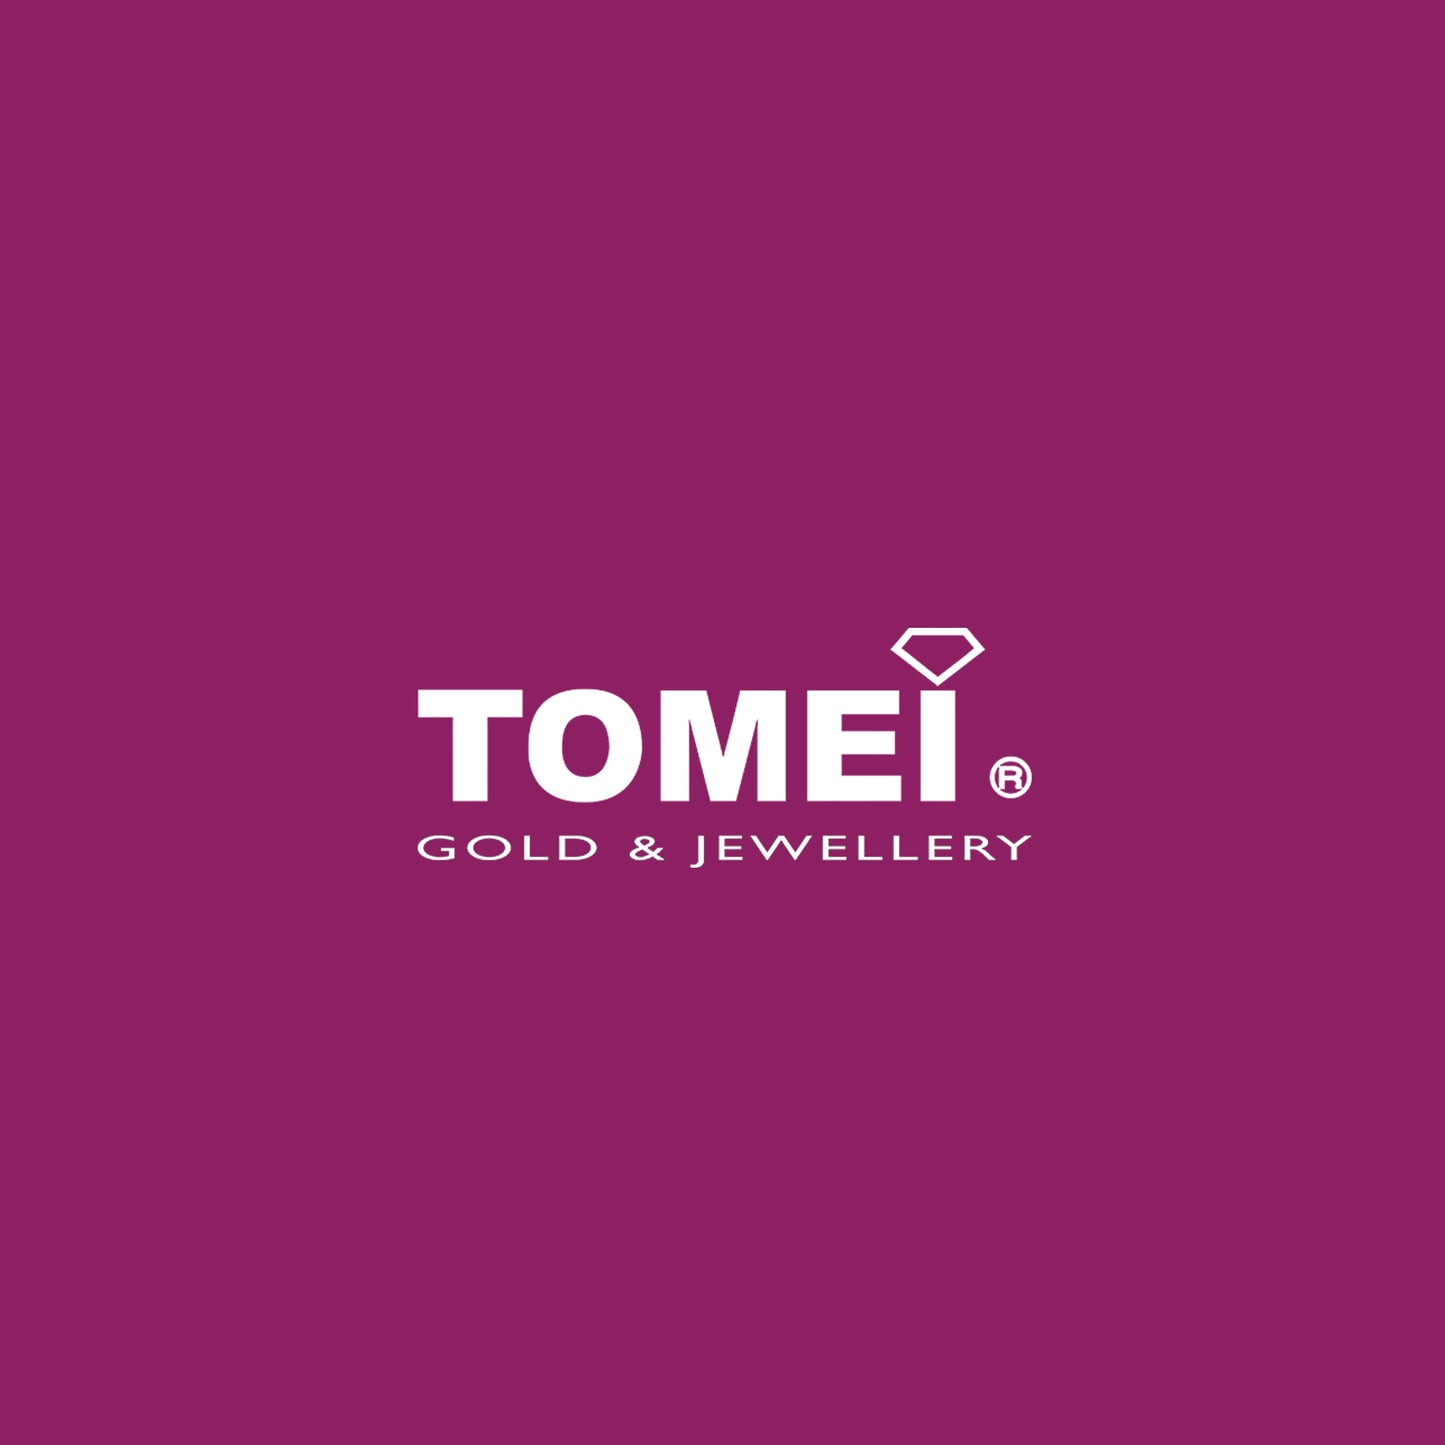 TOMEI Ring, Diamond Rose Gold 750 (R2771R)